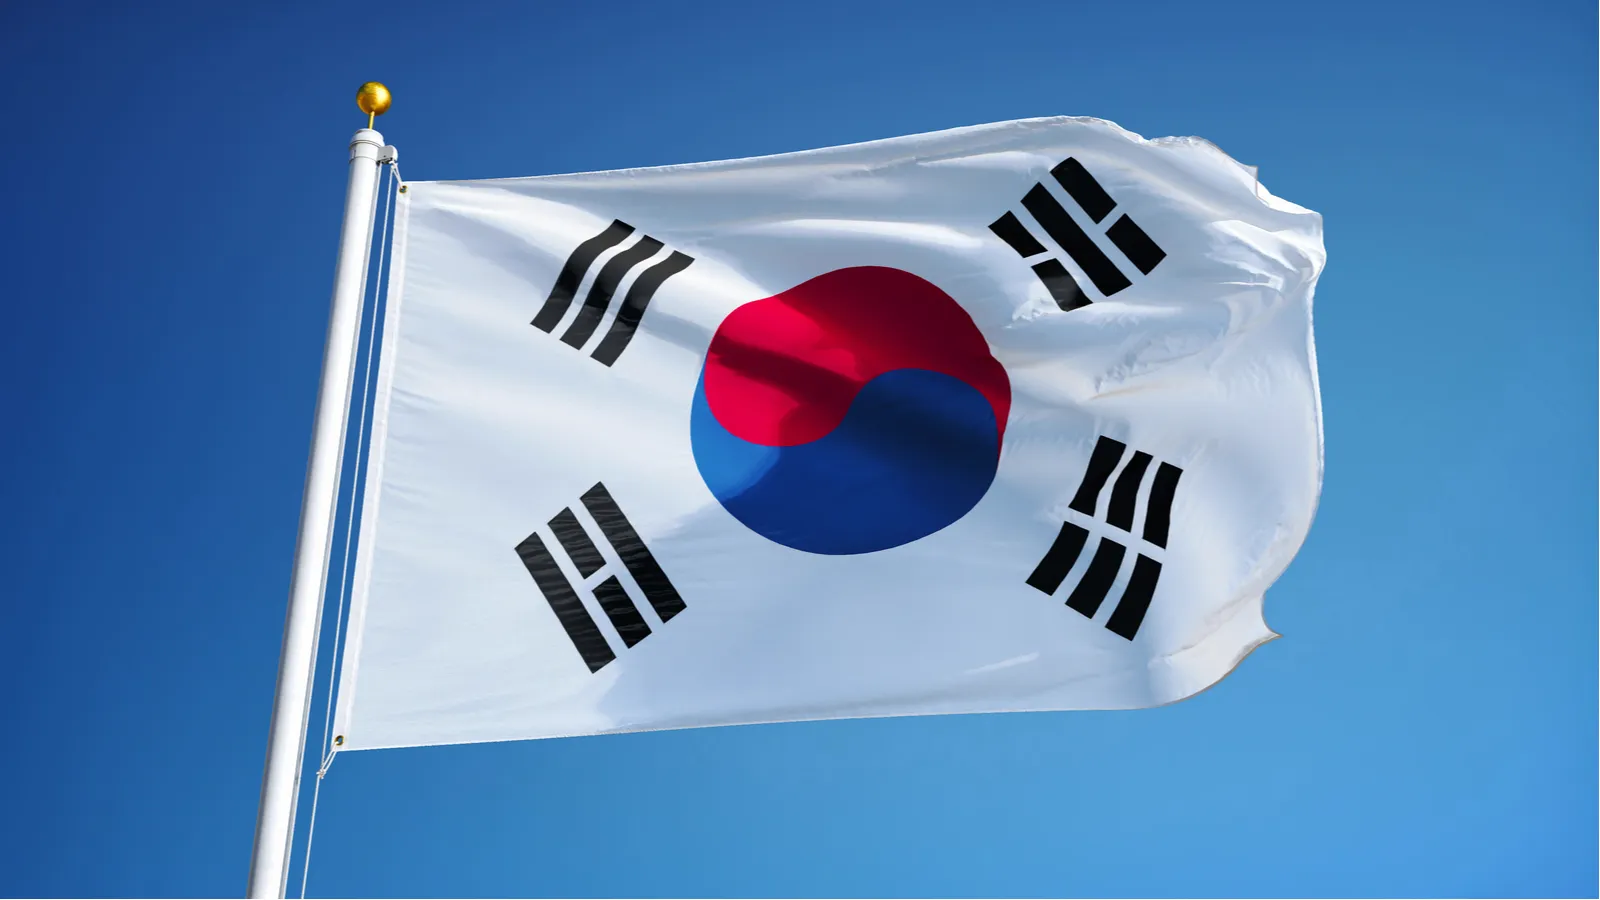 South Korea's flag. Credit: Shutterstock